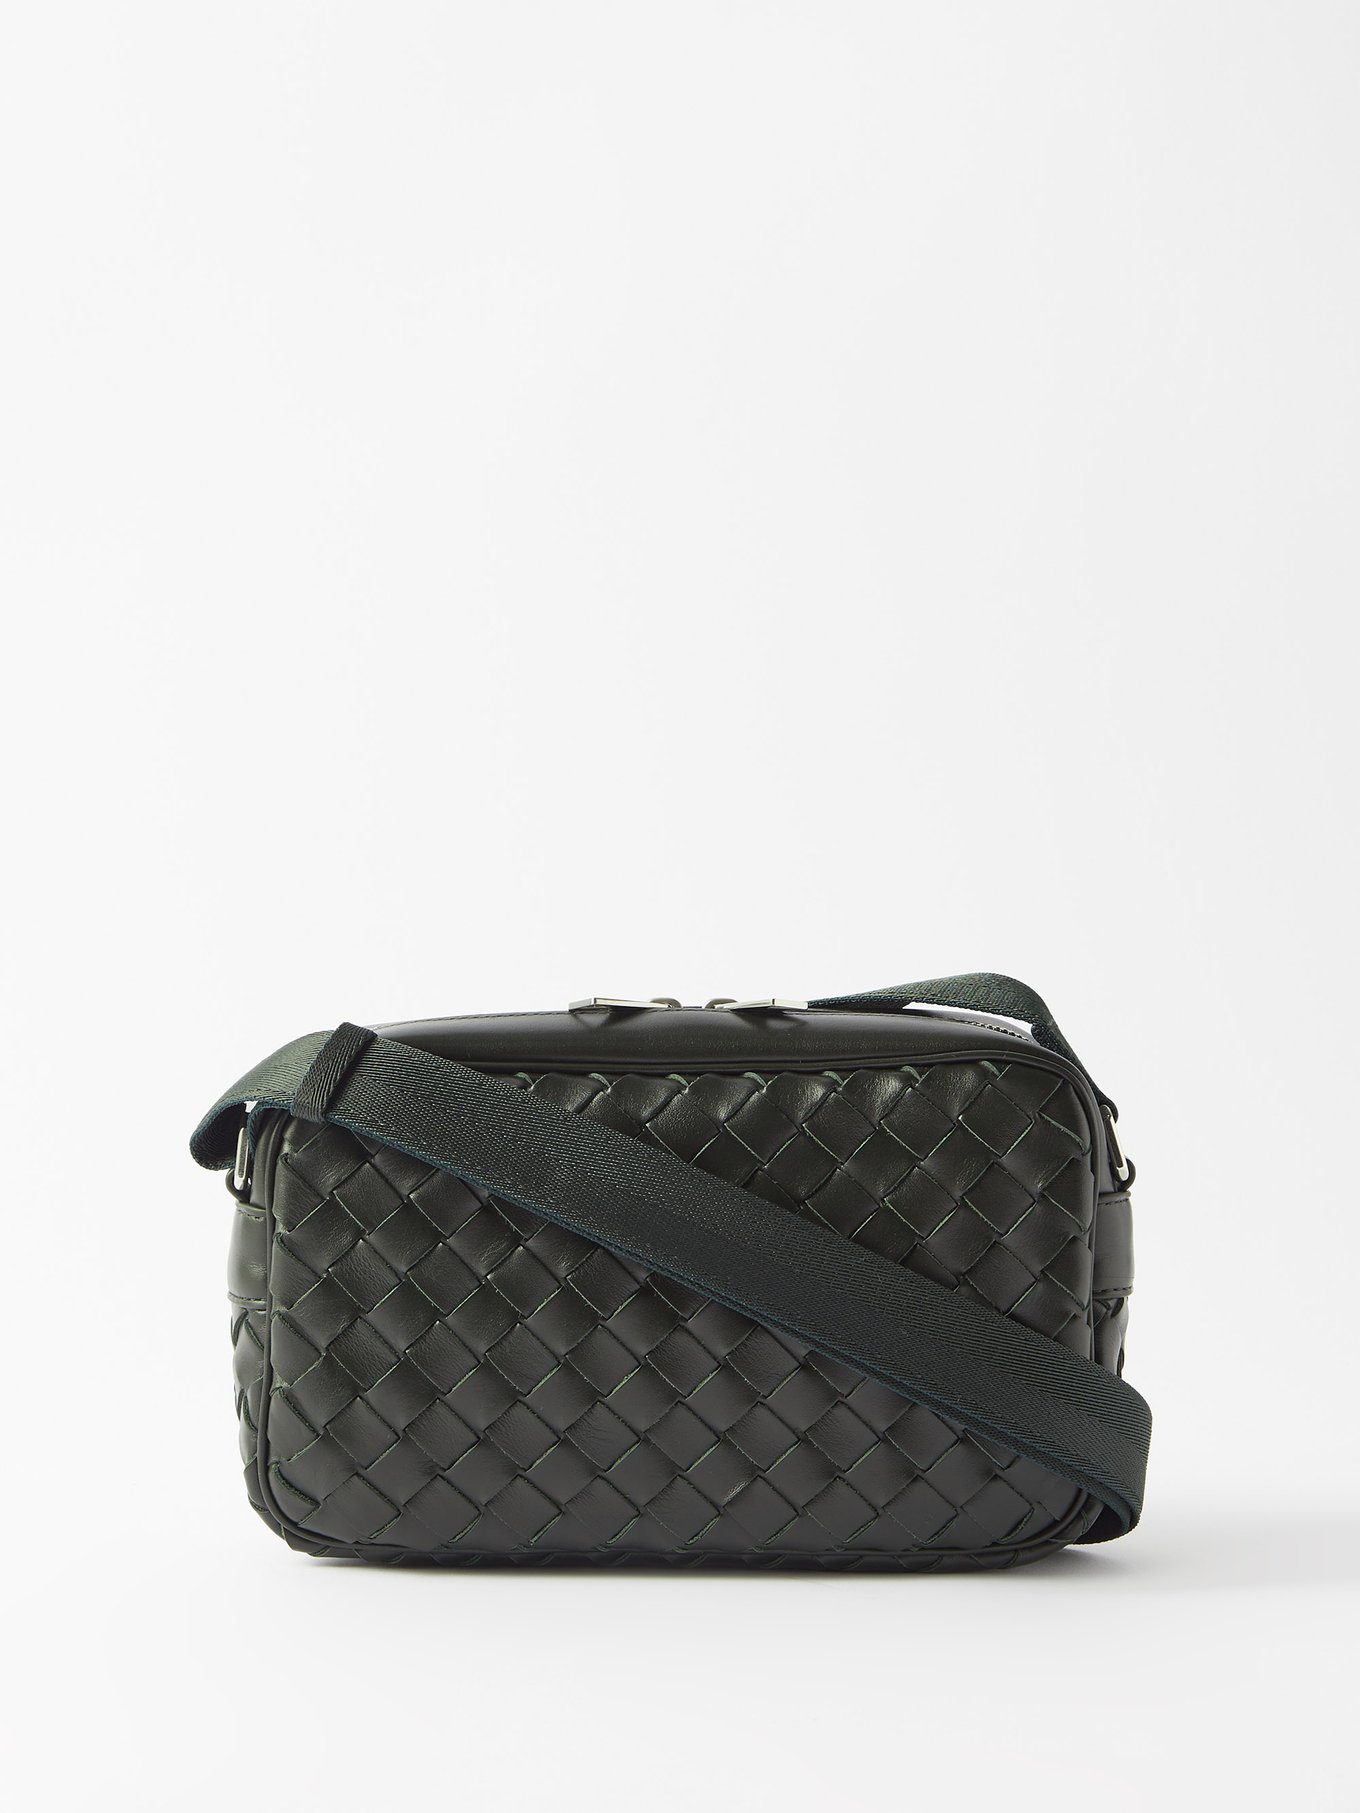 Bottega Veneta® Small Intrecciato Camera Bag in Dark Green. Shop